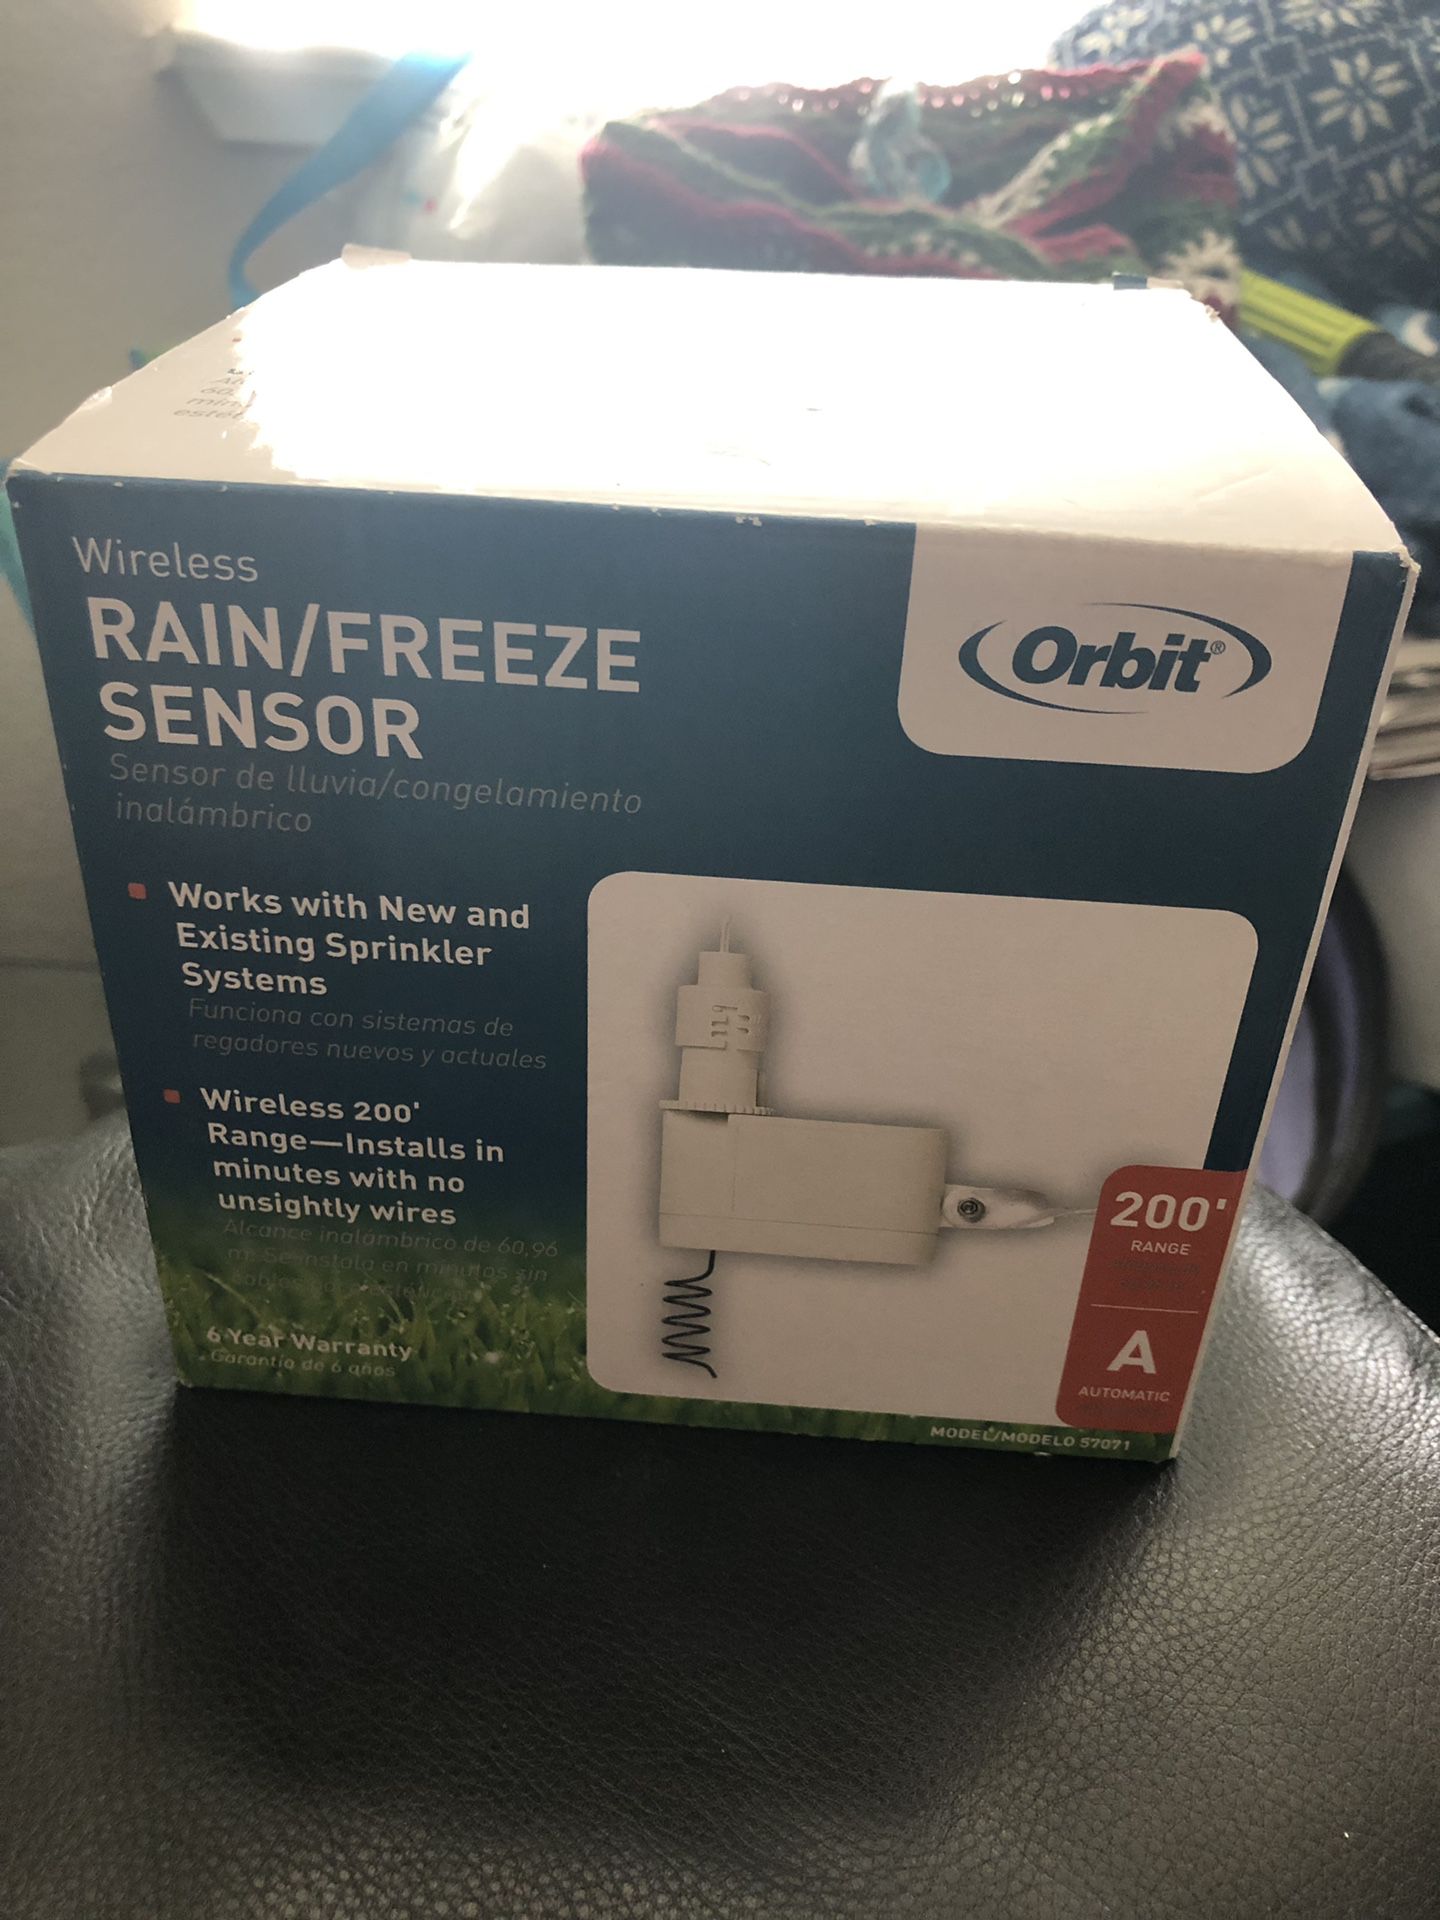 New Orbit Rain Freeze Sensor!